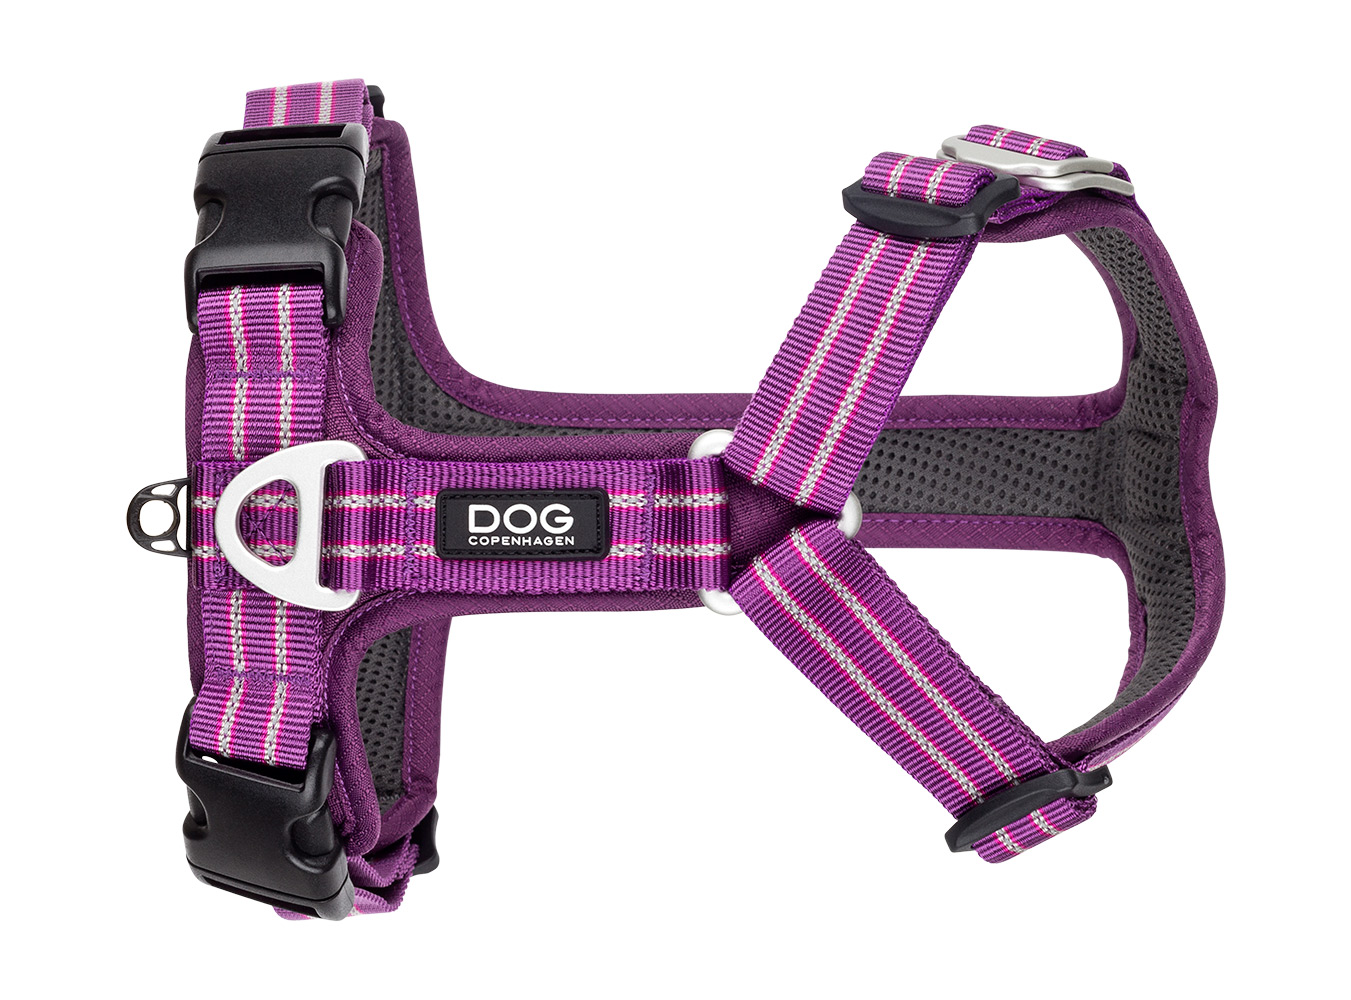 DOG Copenhagen Comfort Walk Air Brustgeschirr - Purple Passion